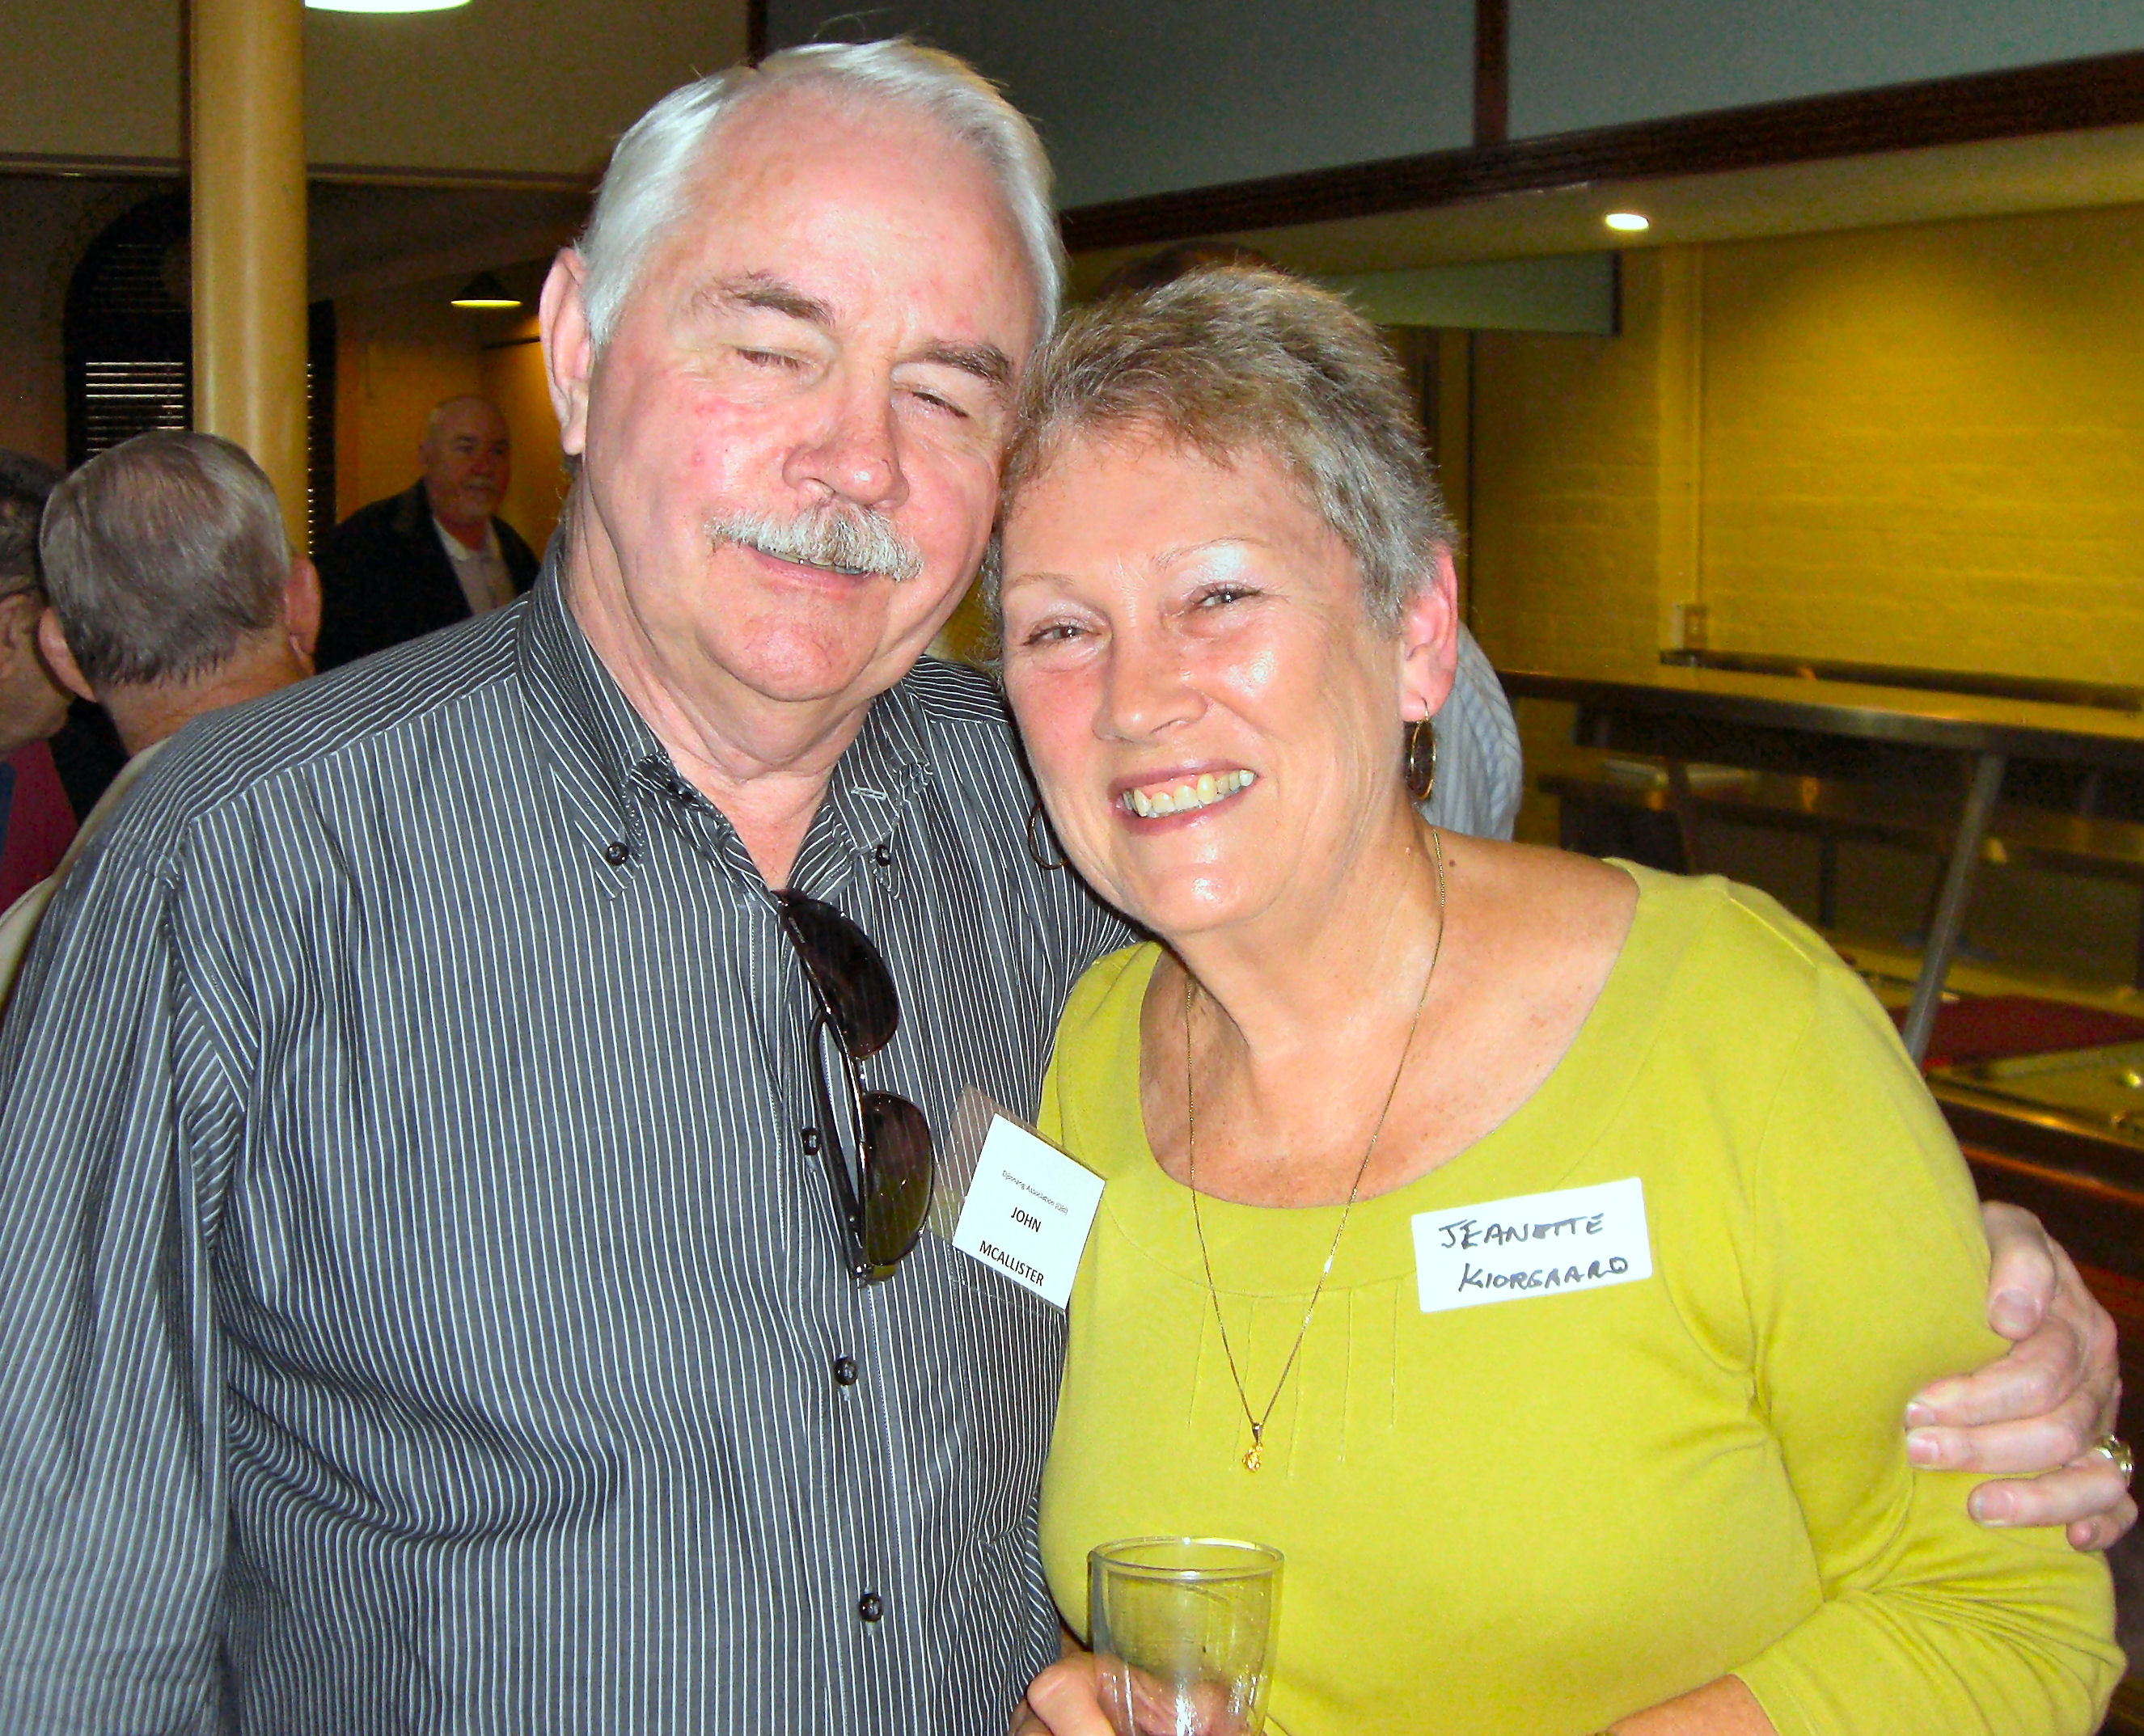 John McAllister and Jeanette Kiergaard.